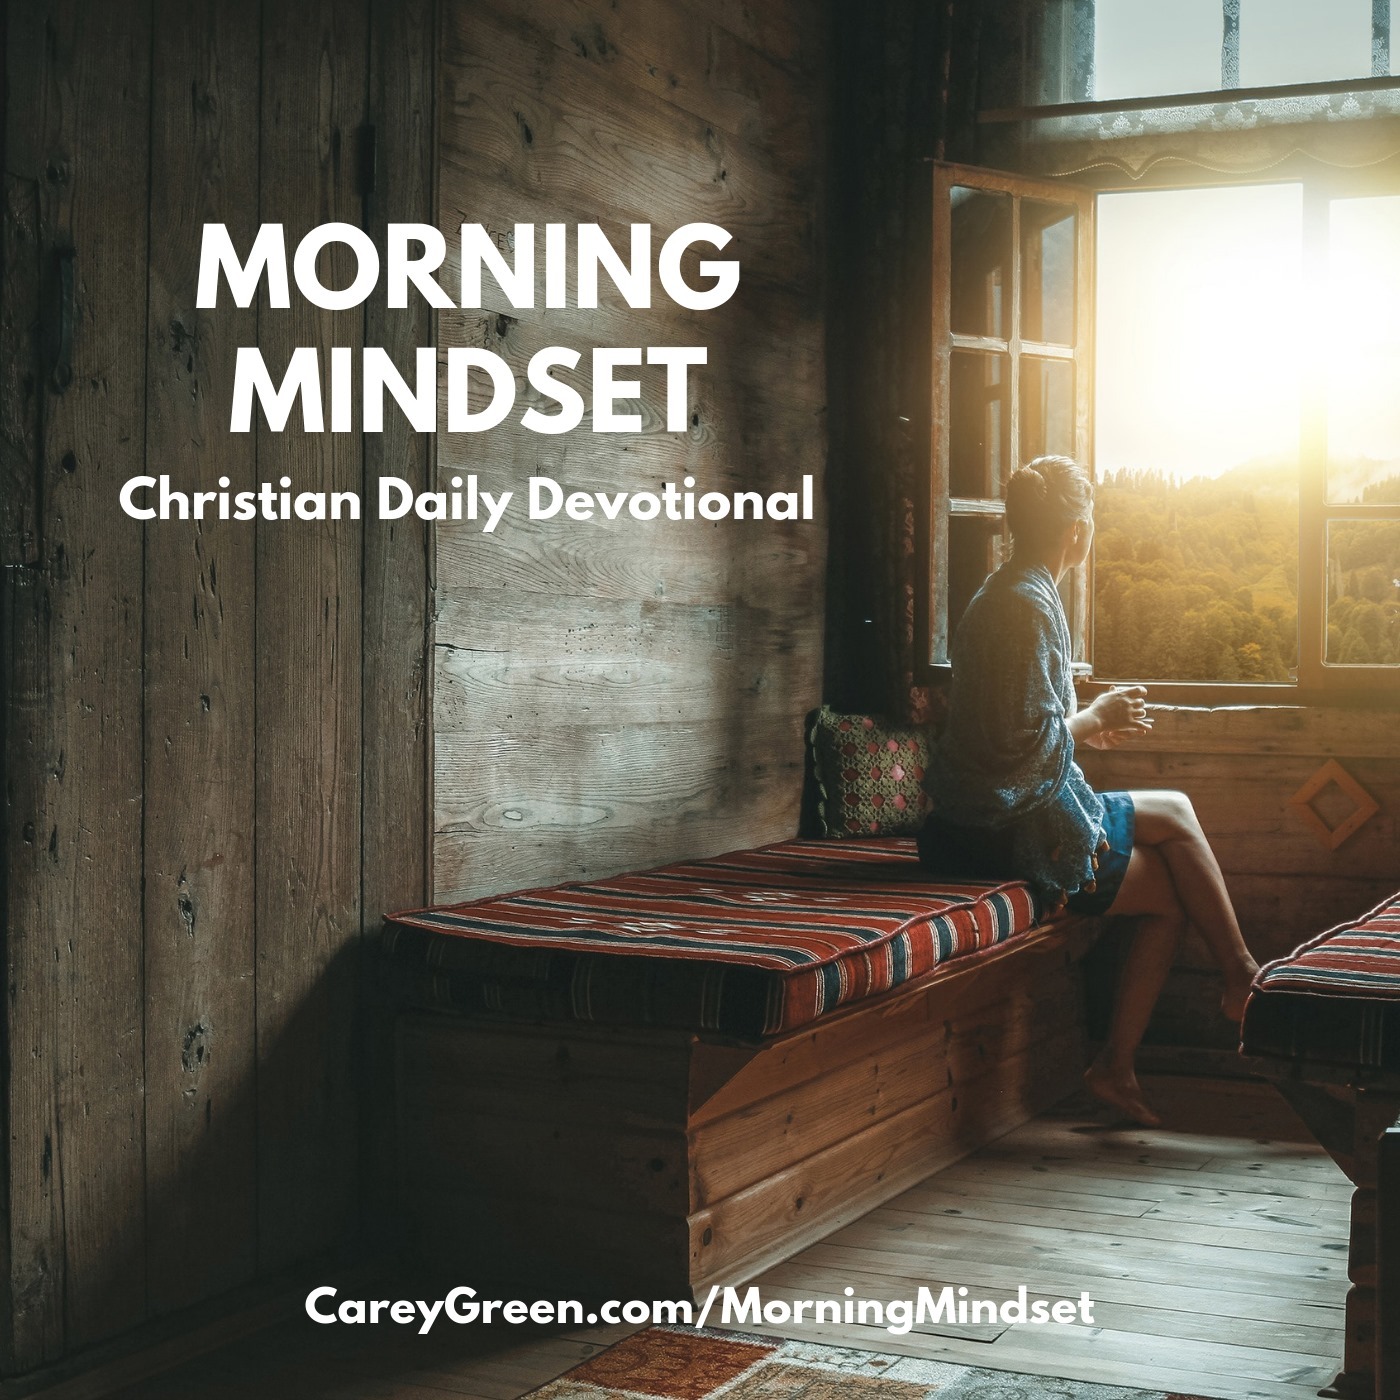 Morning Mindset Daily Christian Devotional podcast show image